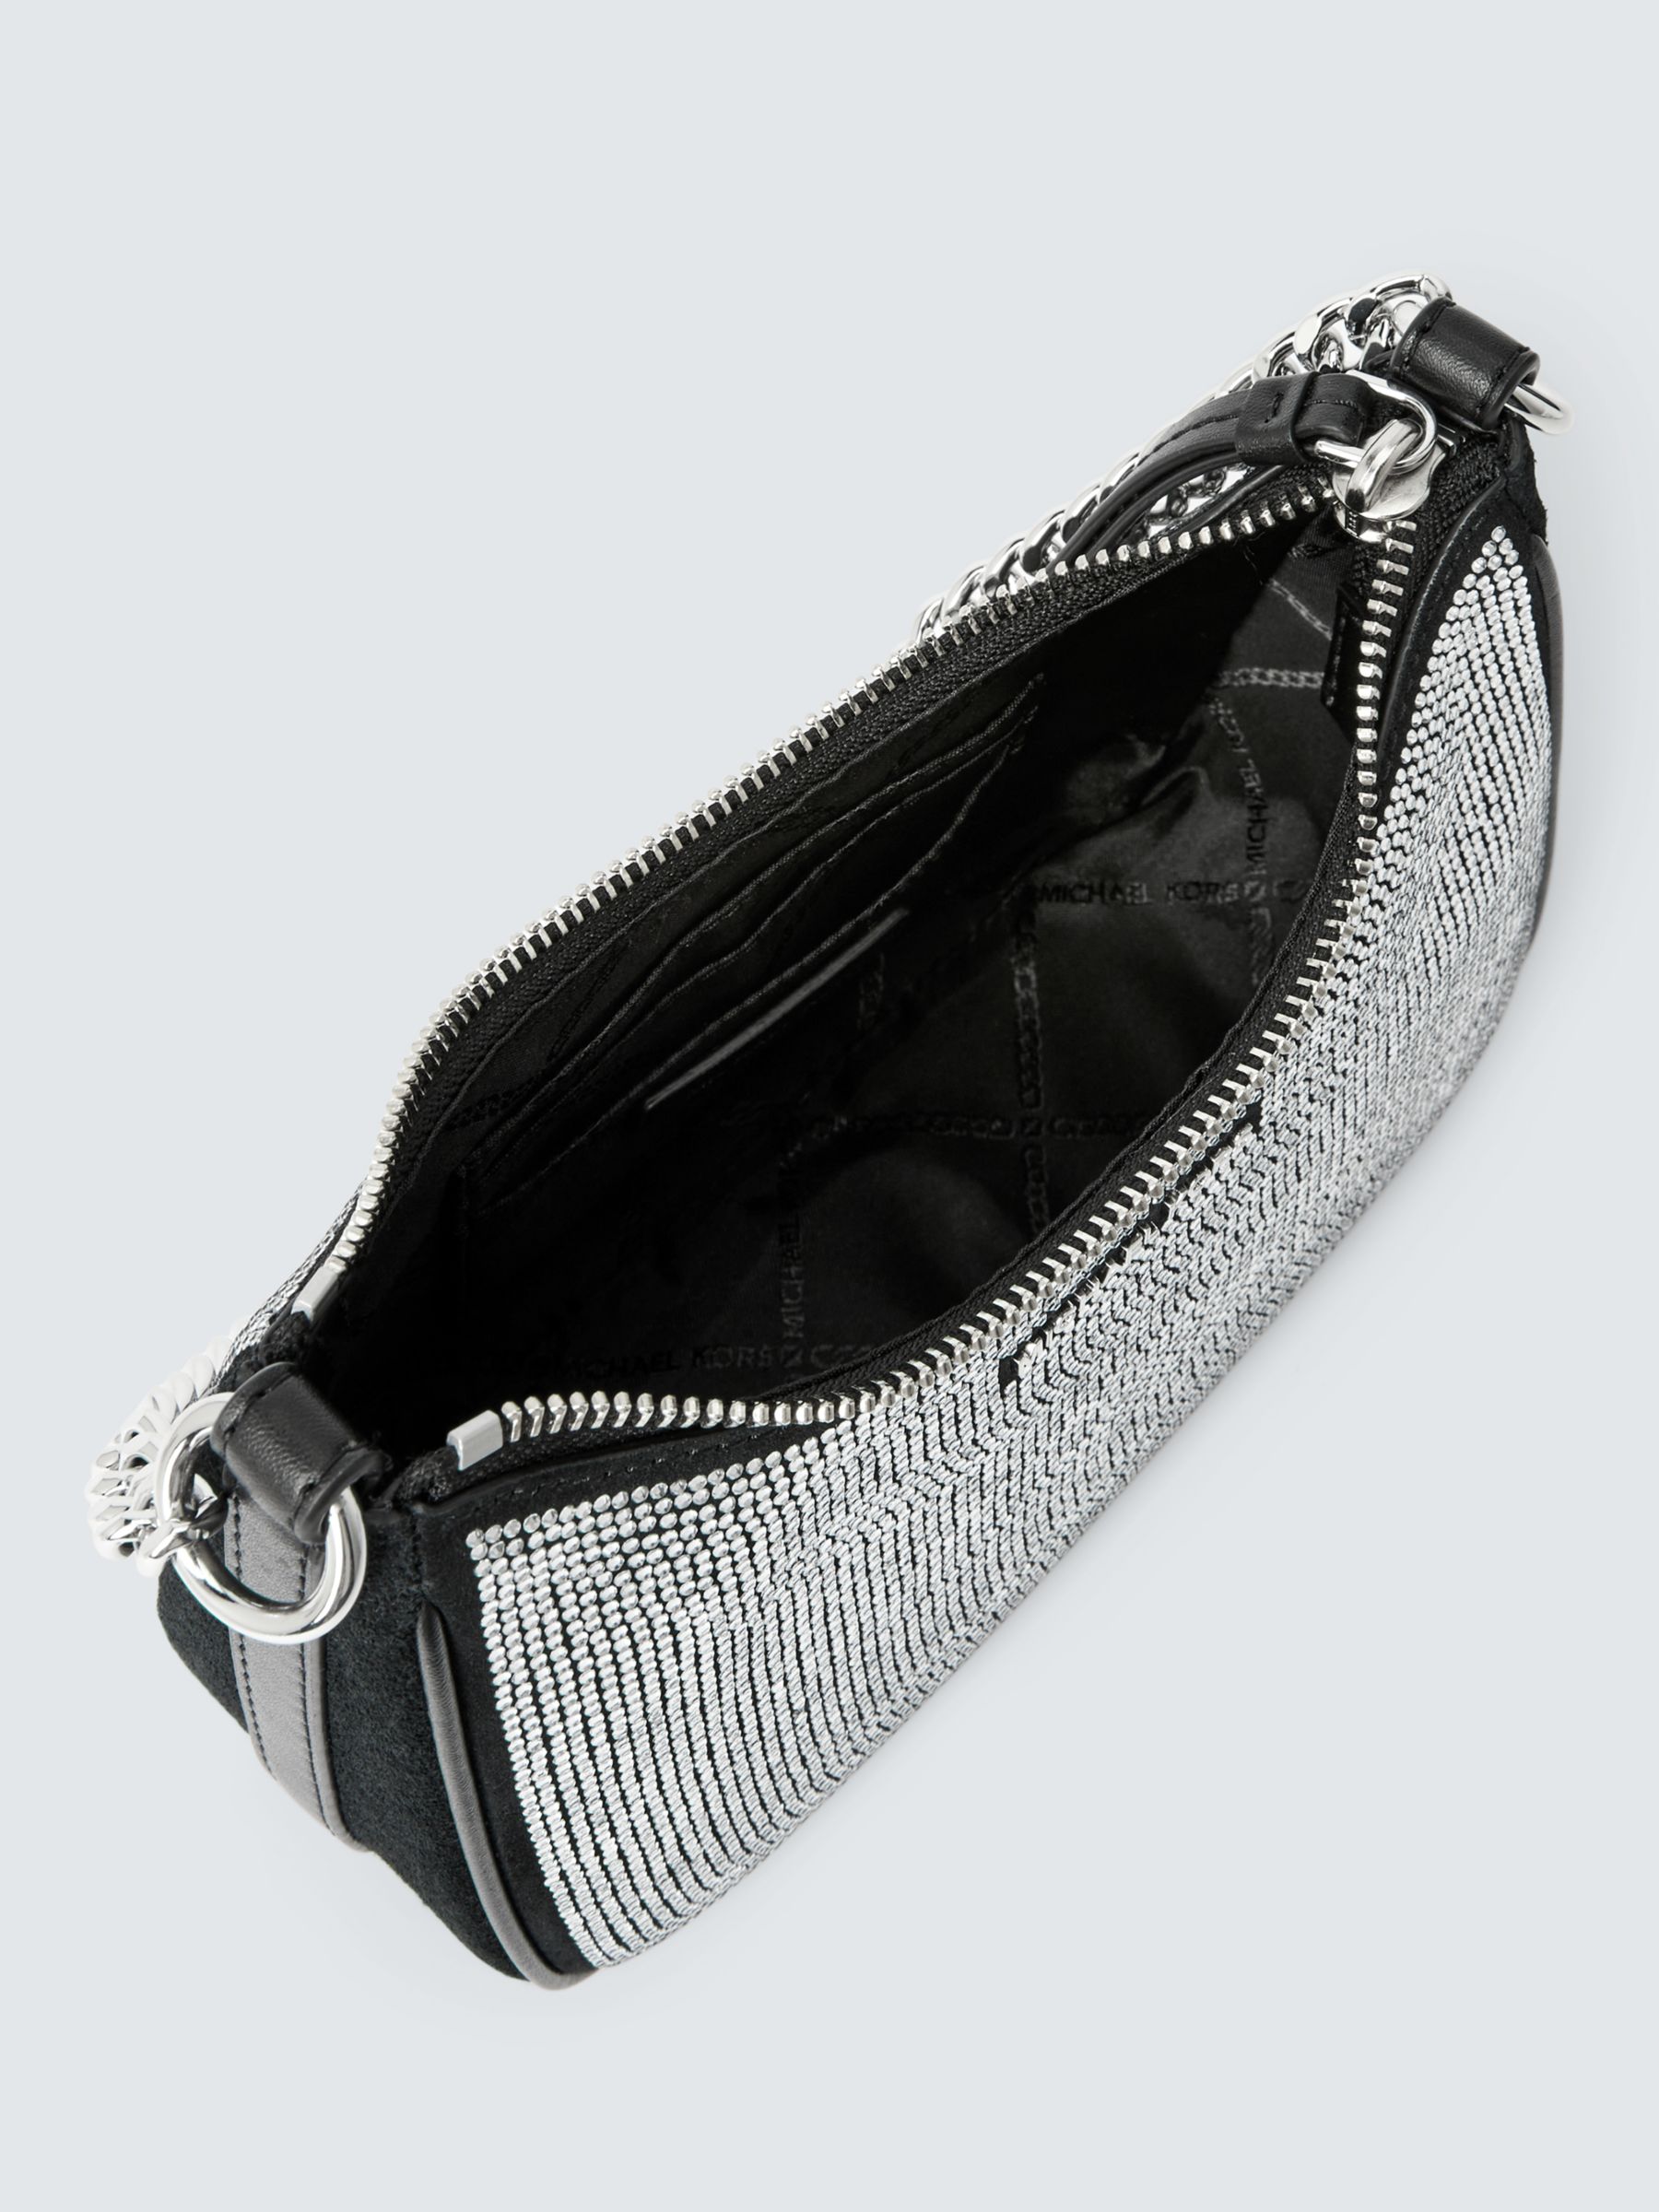 MICHAEL Michael Kors Piper Small Leather Pouchette Bag, Black at John Lewis  & Partners